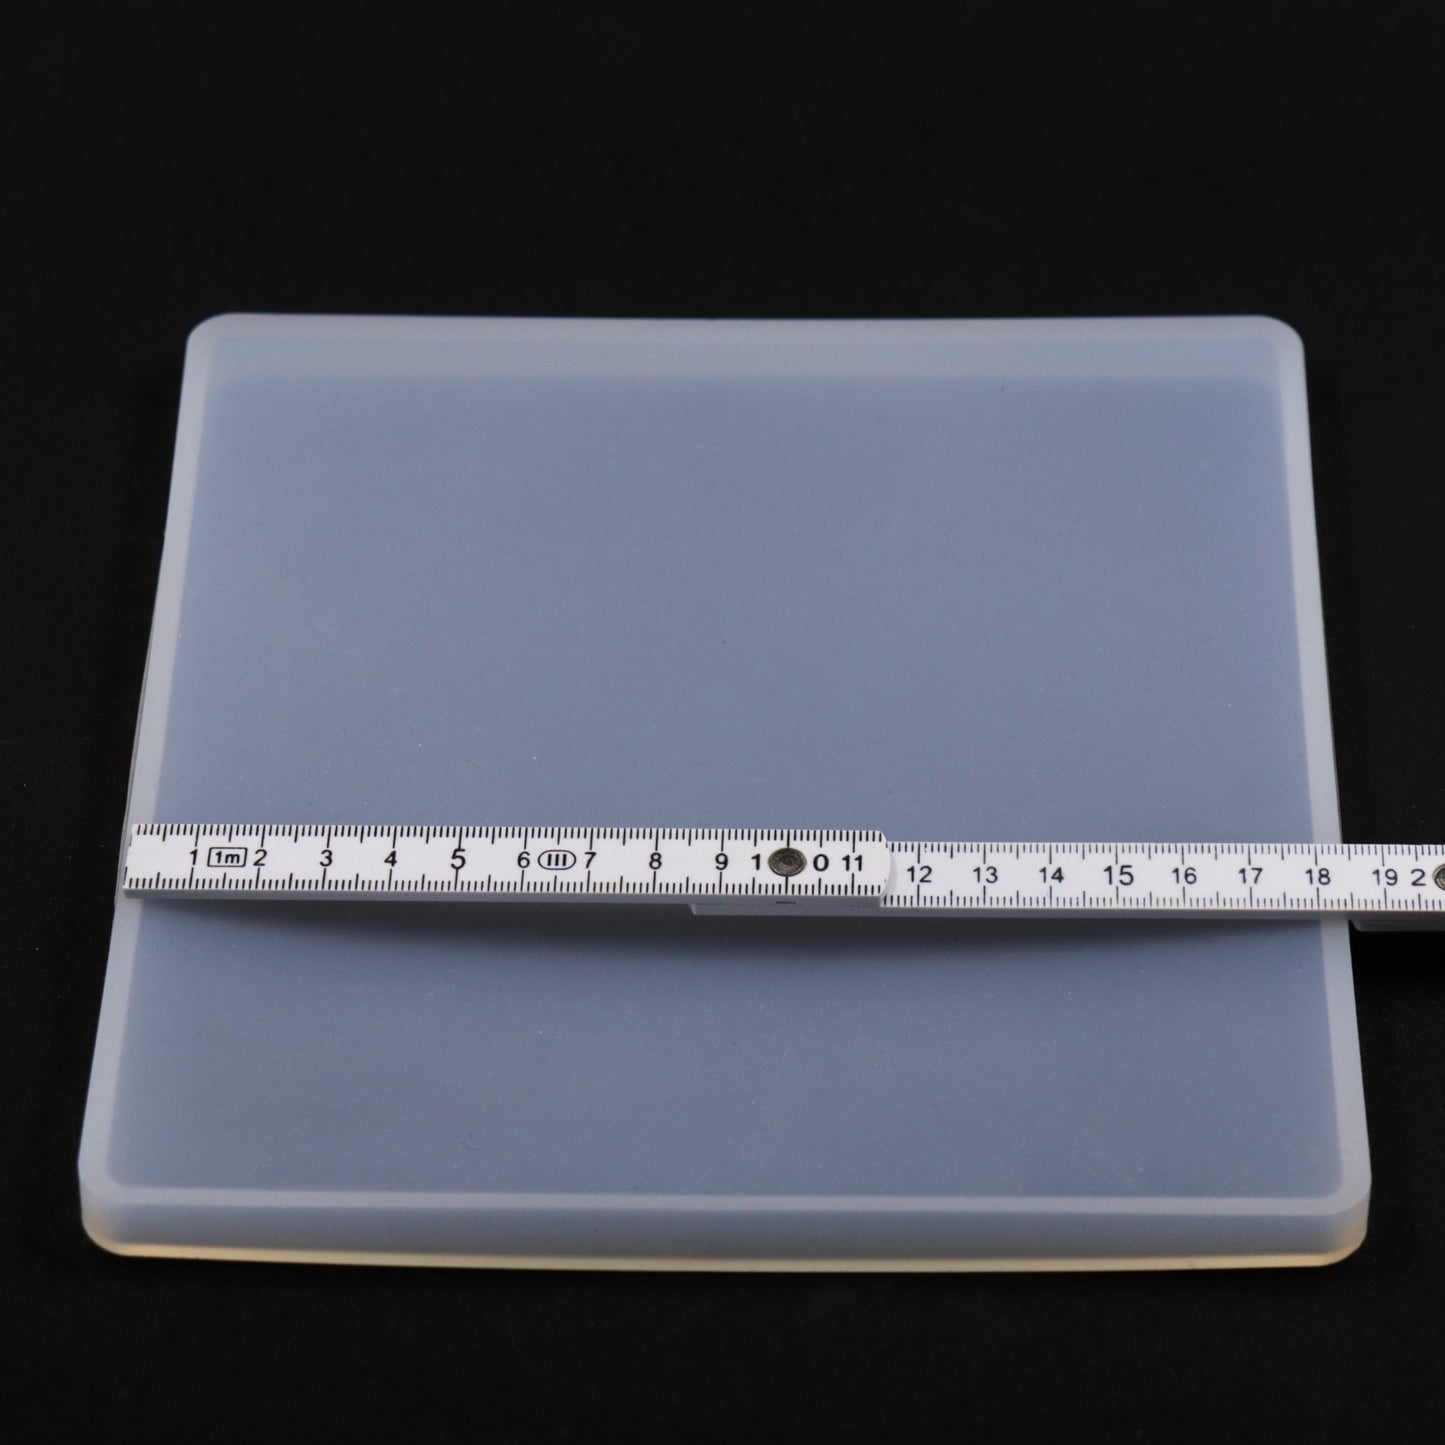 Silikonform Quadratische Tablett Gießform für Raysin, Epoxidharz, ca. 18 cm